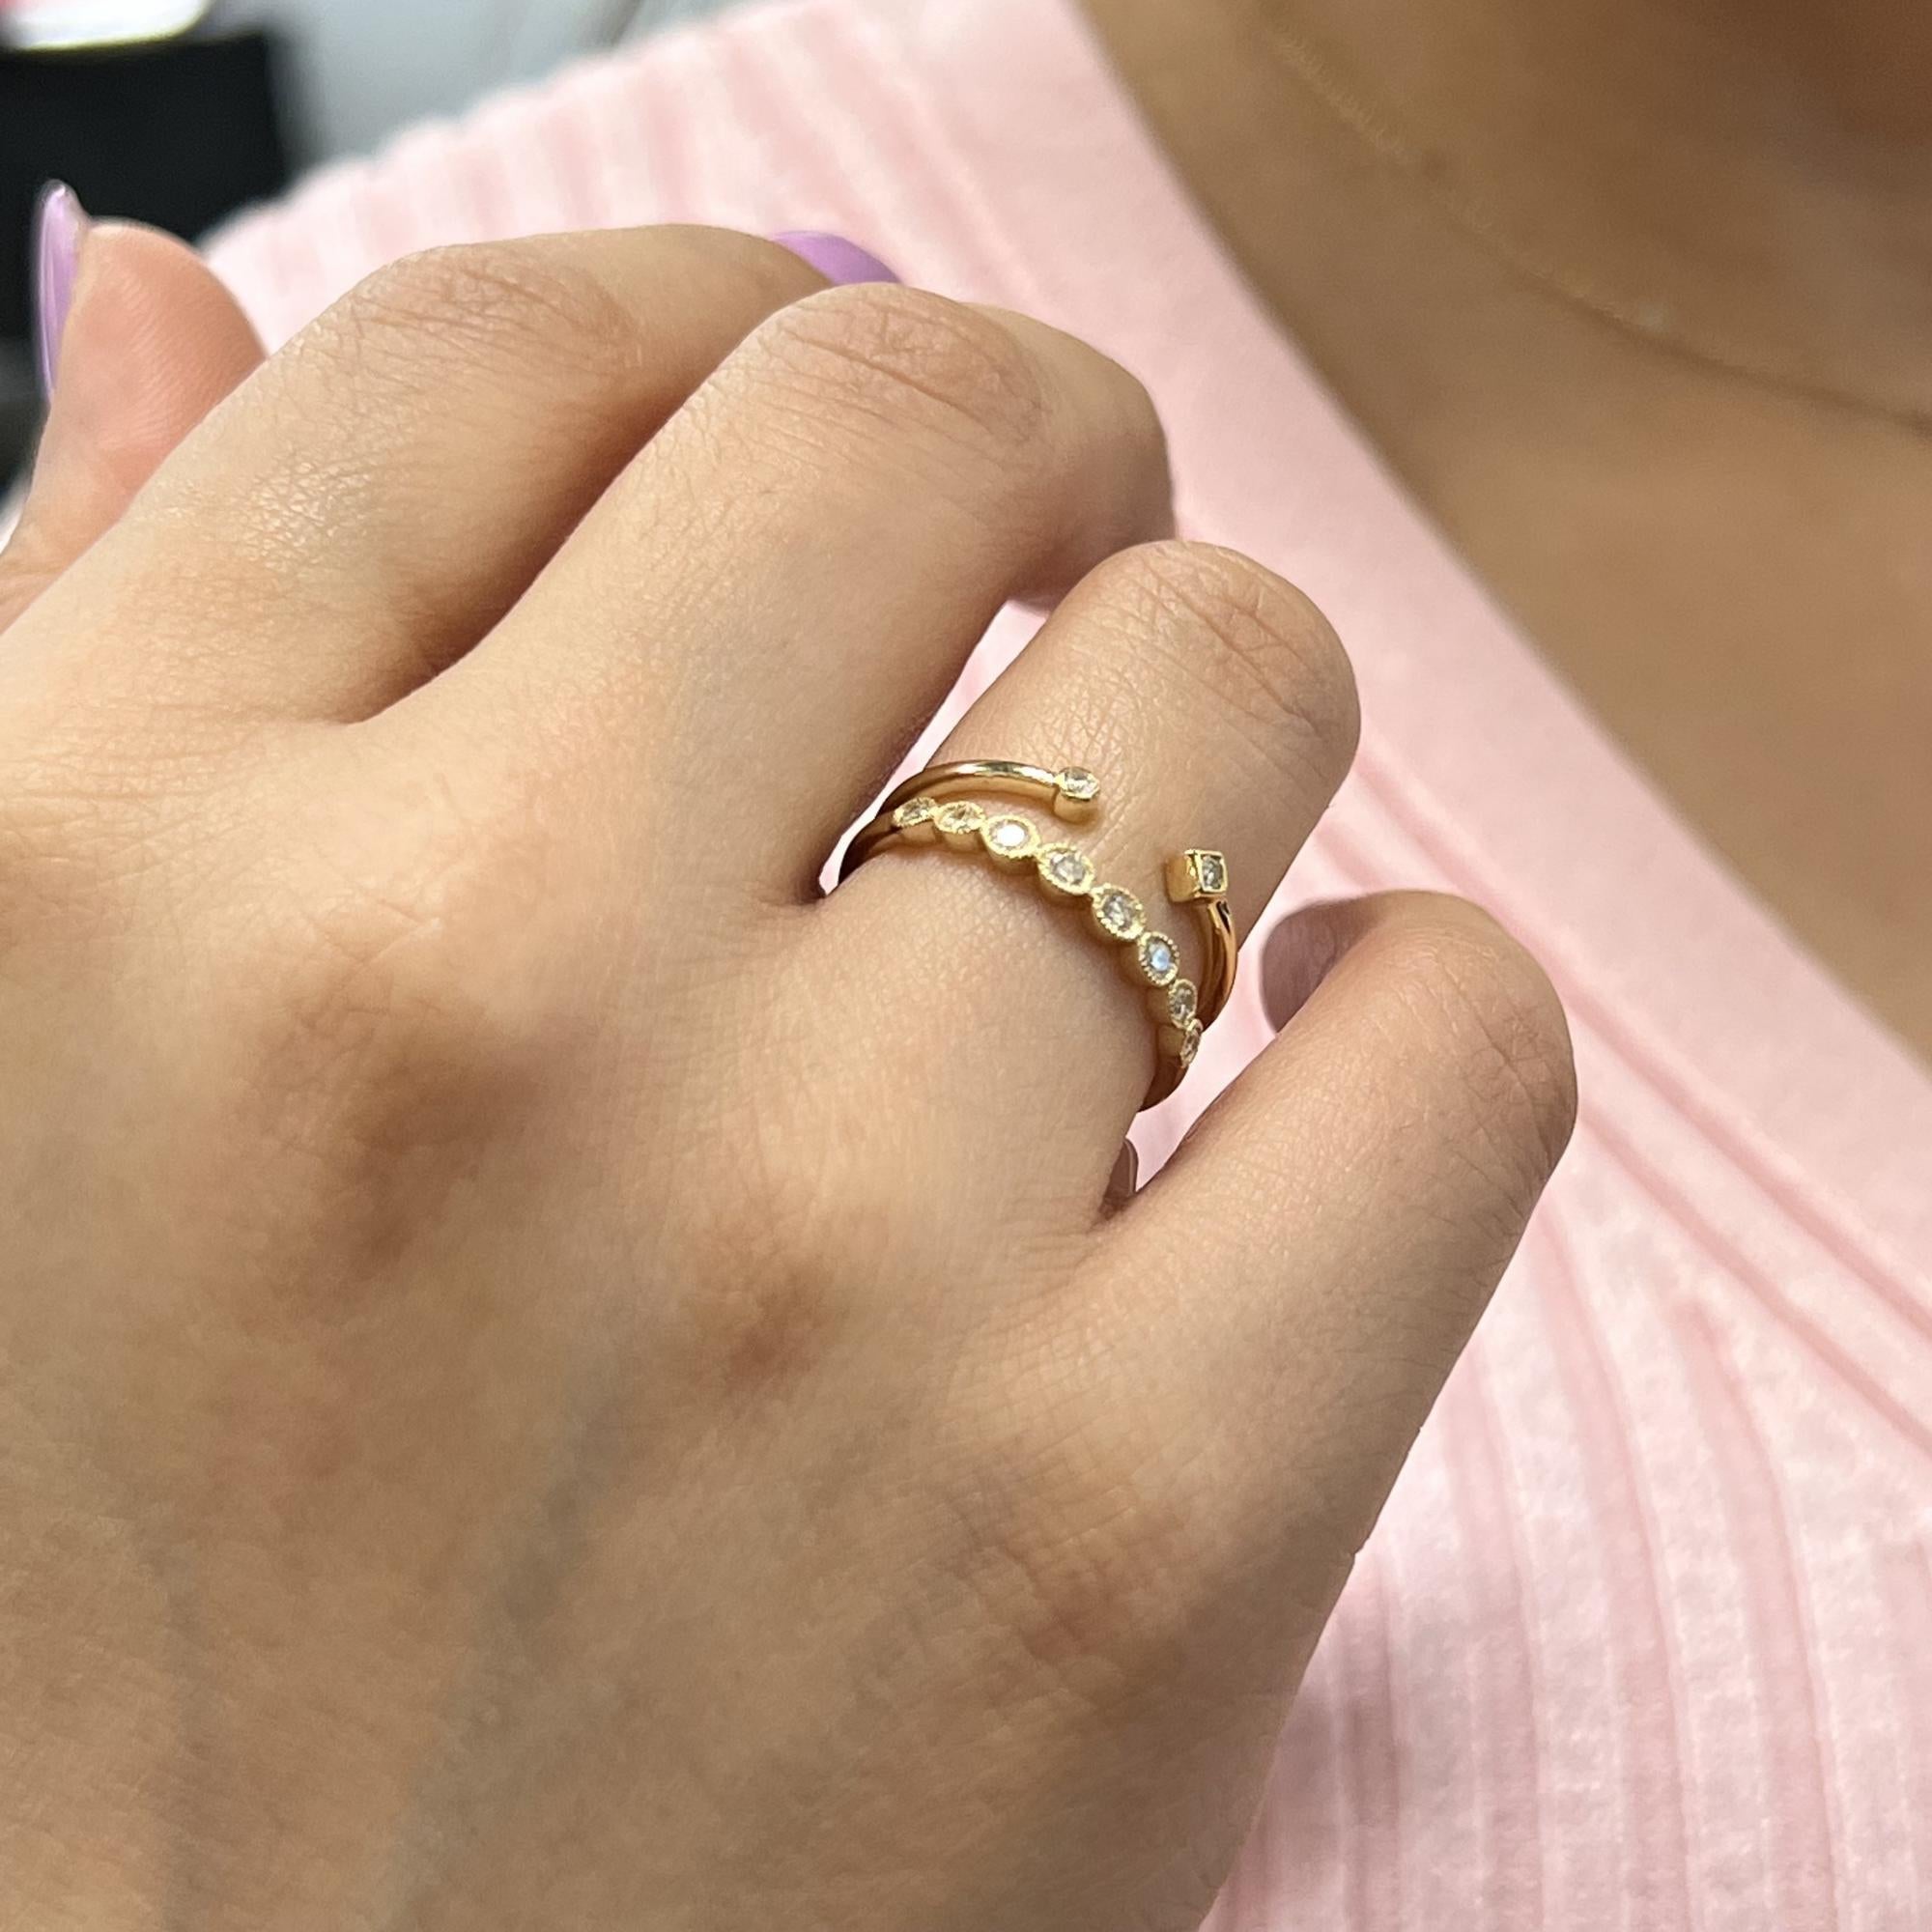 Rachel Koen Open Shank Diamond Ring 14K Yellow Gold 0.04cttw In New Condition For Sale In New York, NY